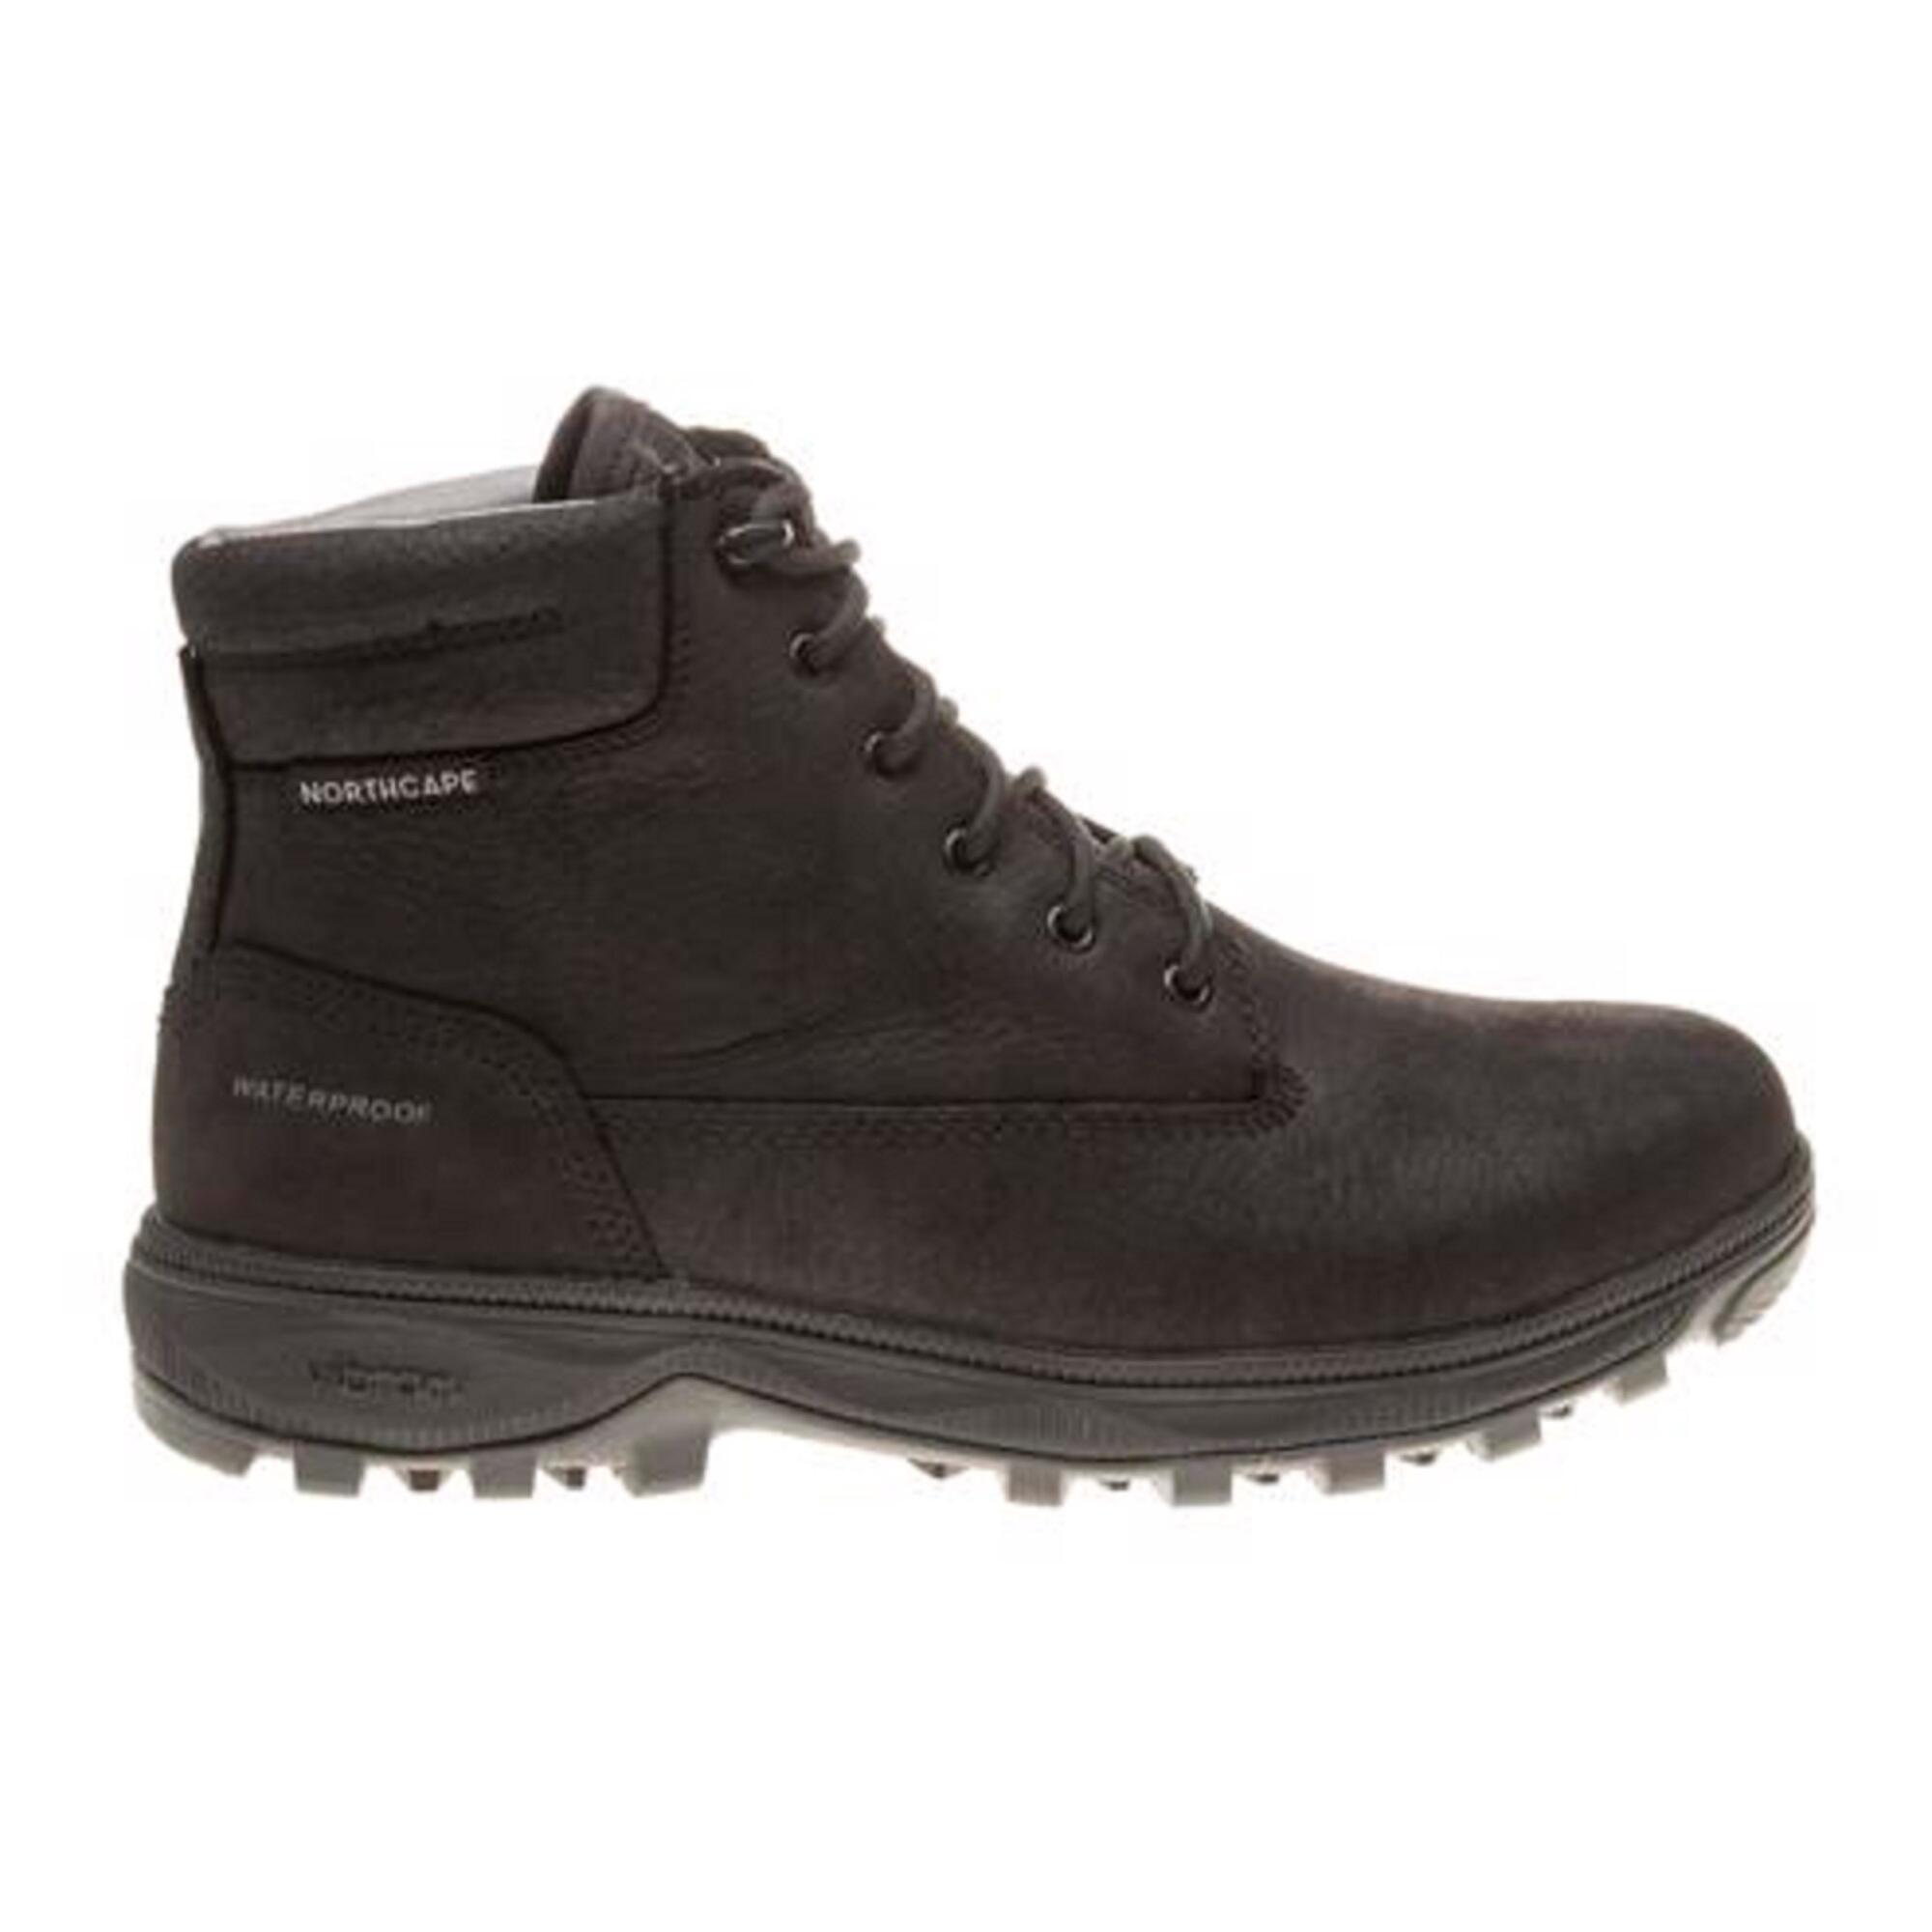 Men's waterproof walking boots - Northcape Granite - Black 2/5